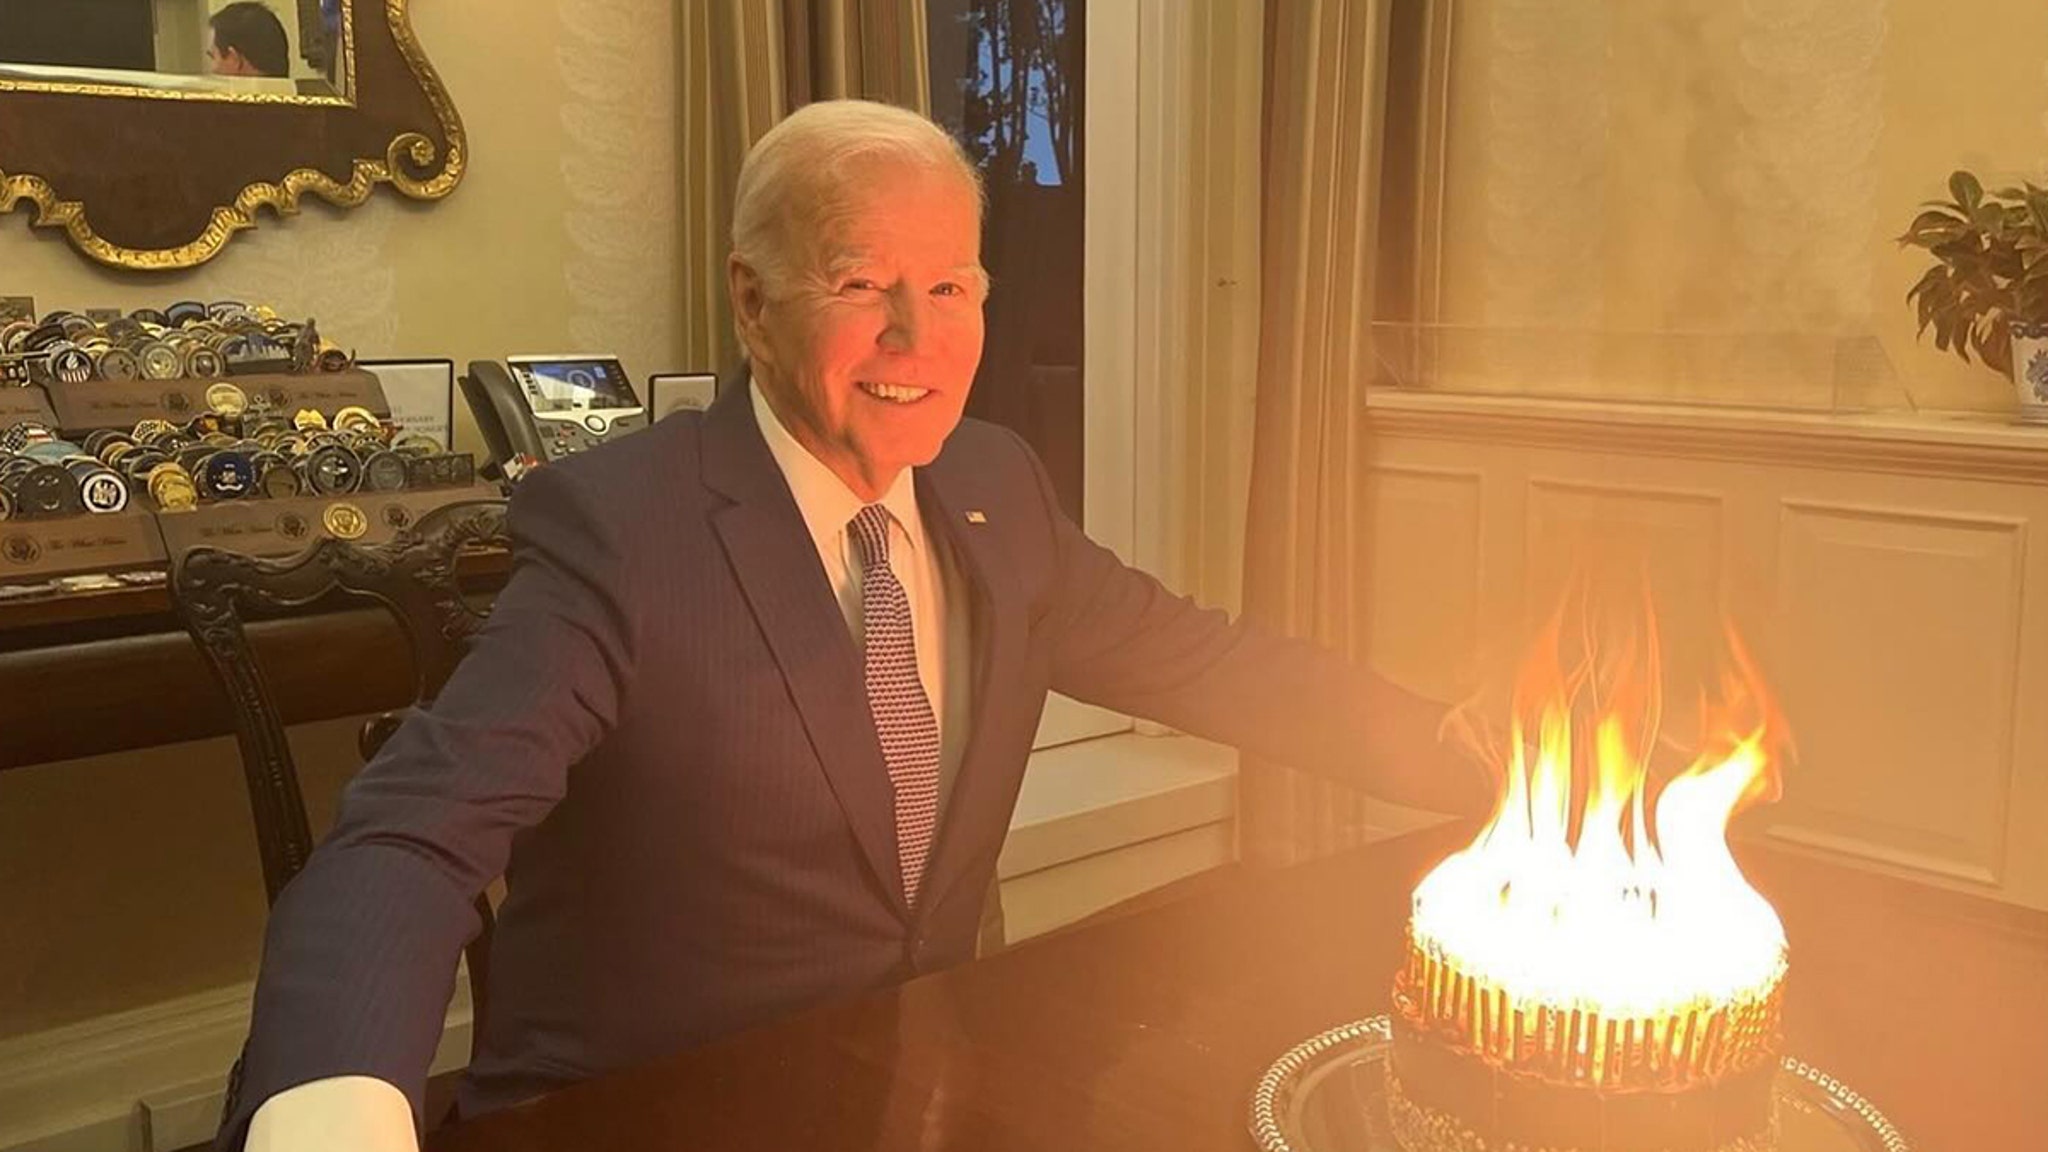 President Biden’s Fiery Birthday Cake Sparks Memes, Jokes Galore